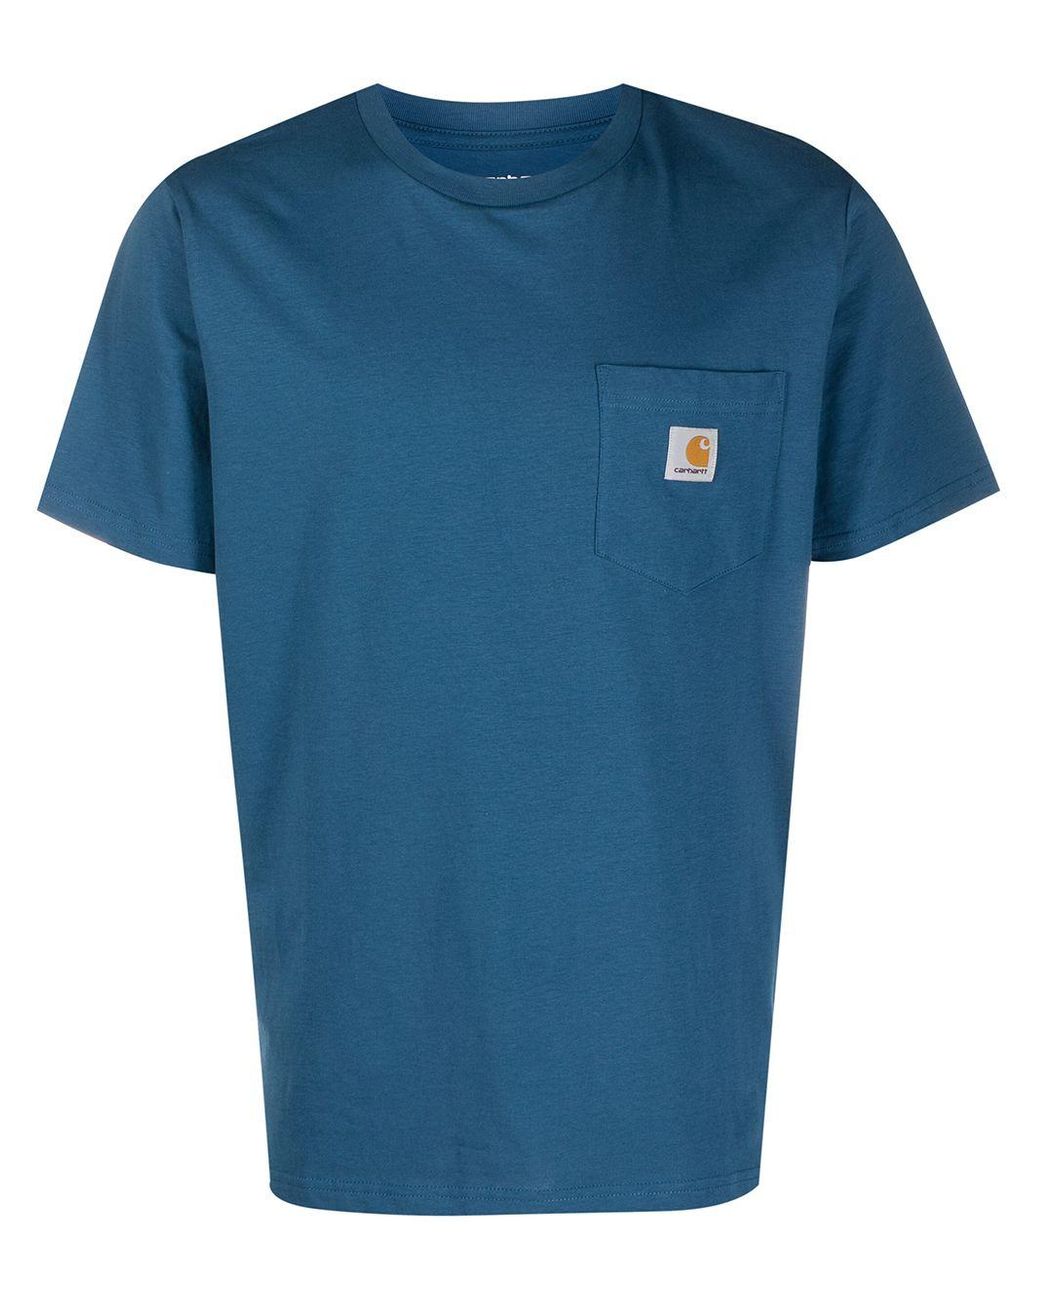 Carhartt WIP Cotton Short-sleeve Logo Pocket T-shirt in Blue for Men - Lyst